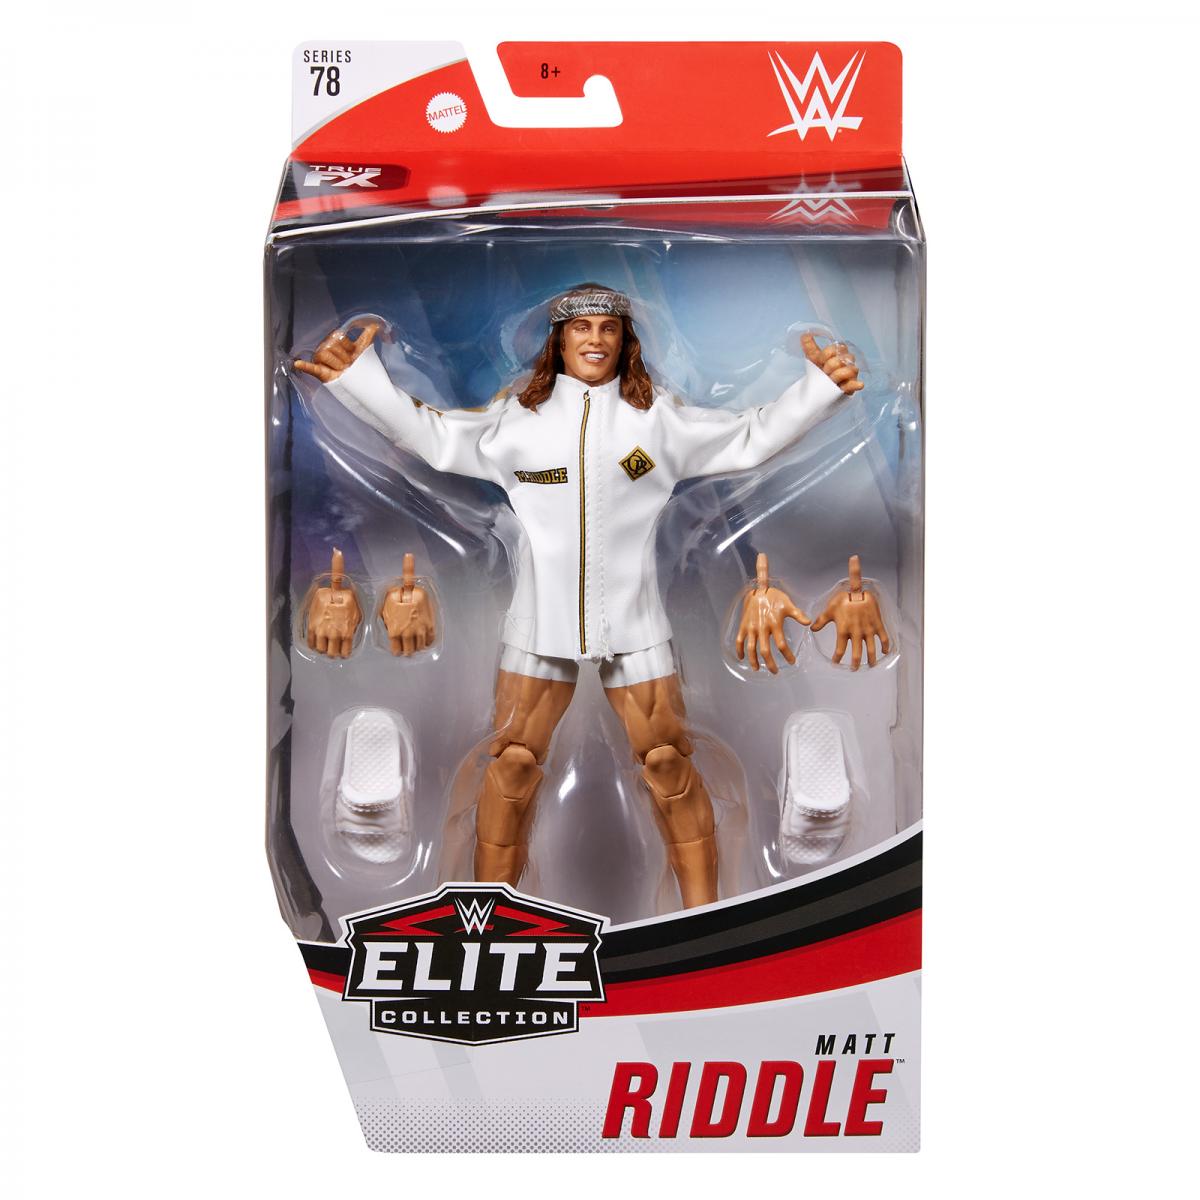 2020 WWE Mattel Elite Collection Series 78 Matt Riddle